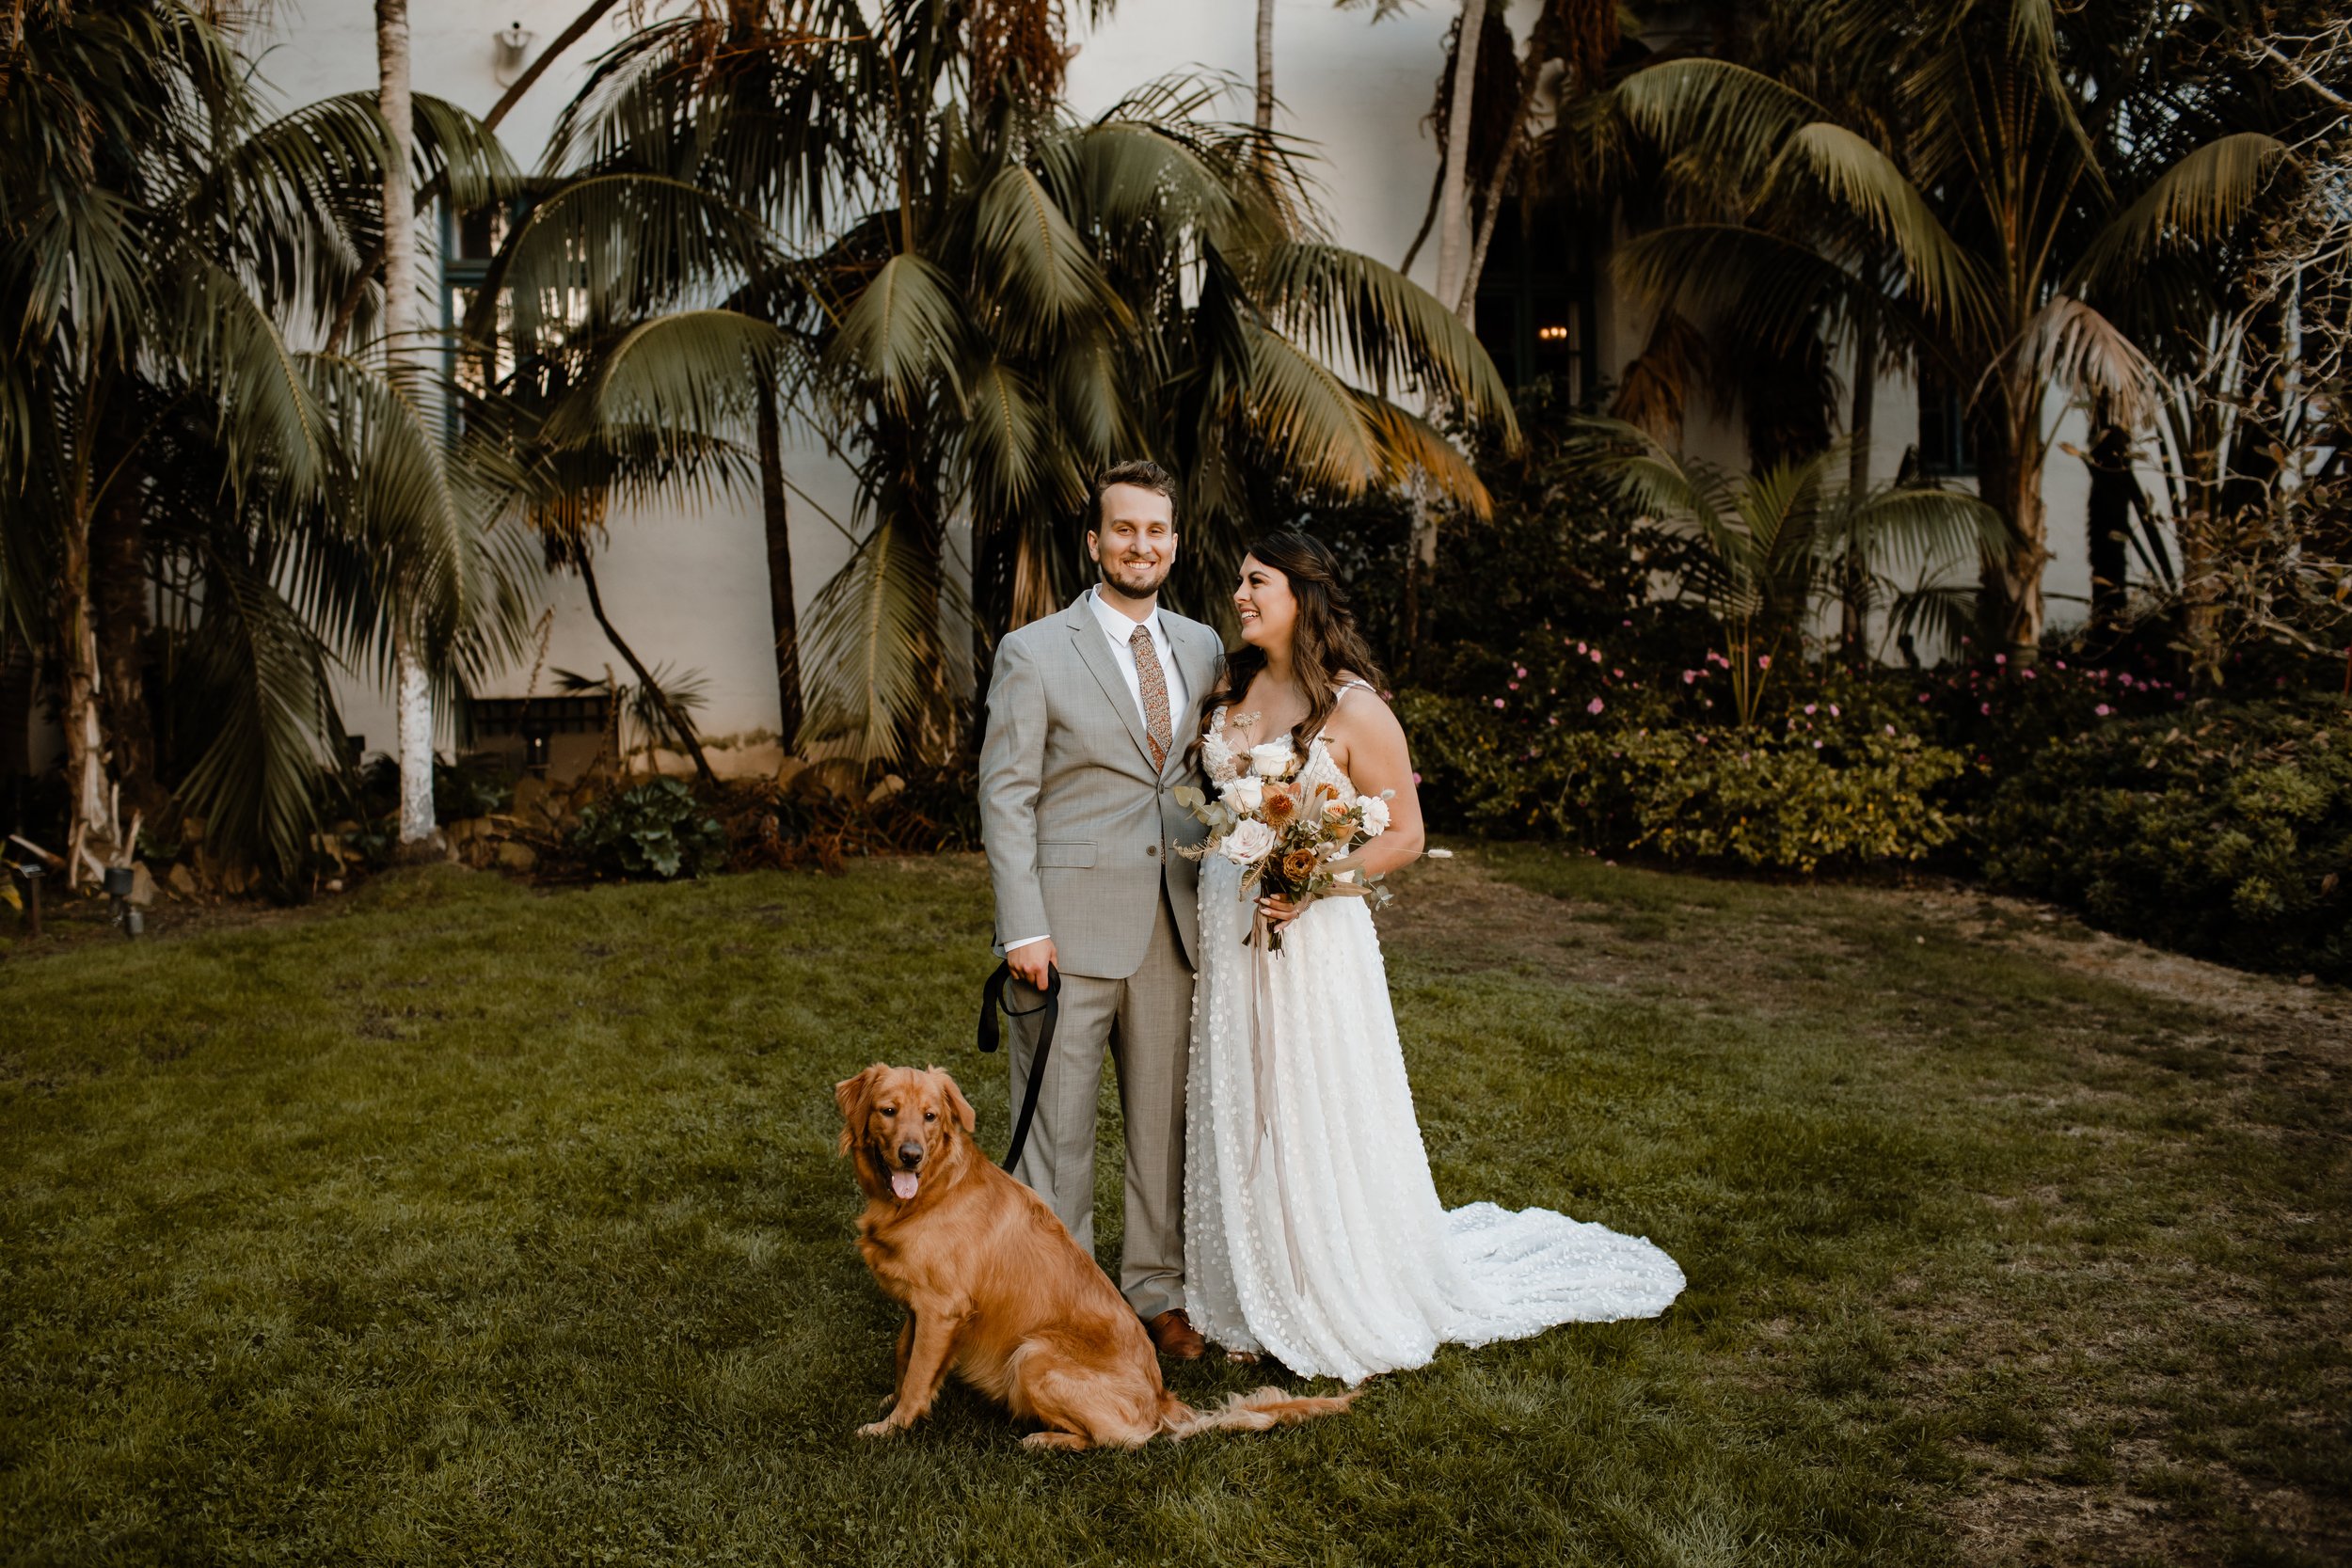 Lydia and Colin_s Wedding - Carousel House Santa Barbara, CA - Eve Rox Photography-166.jpg